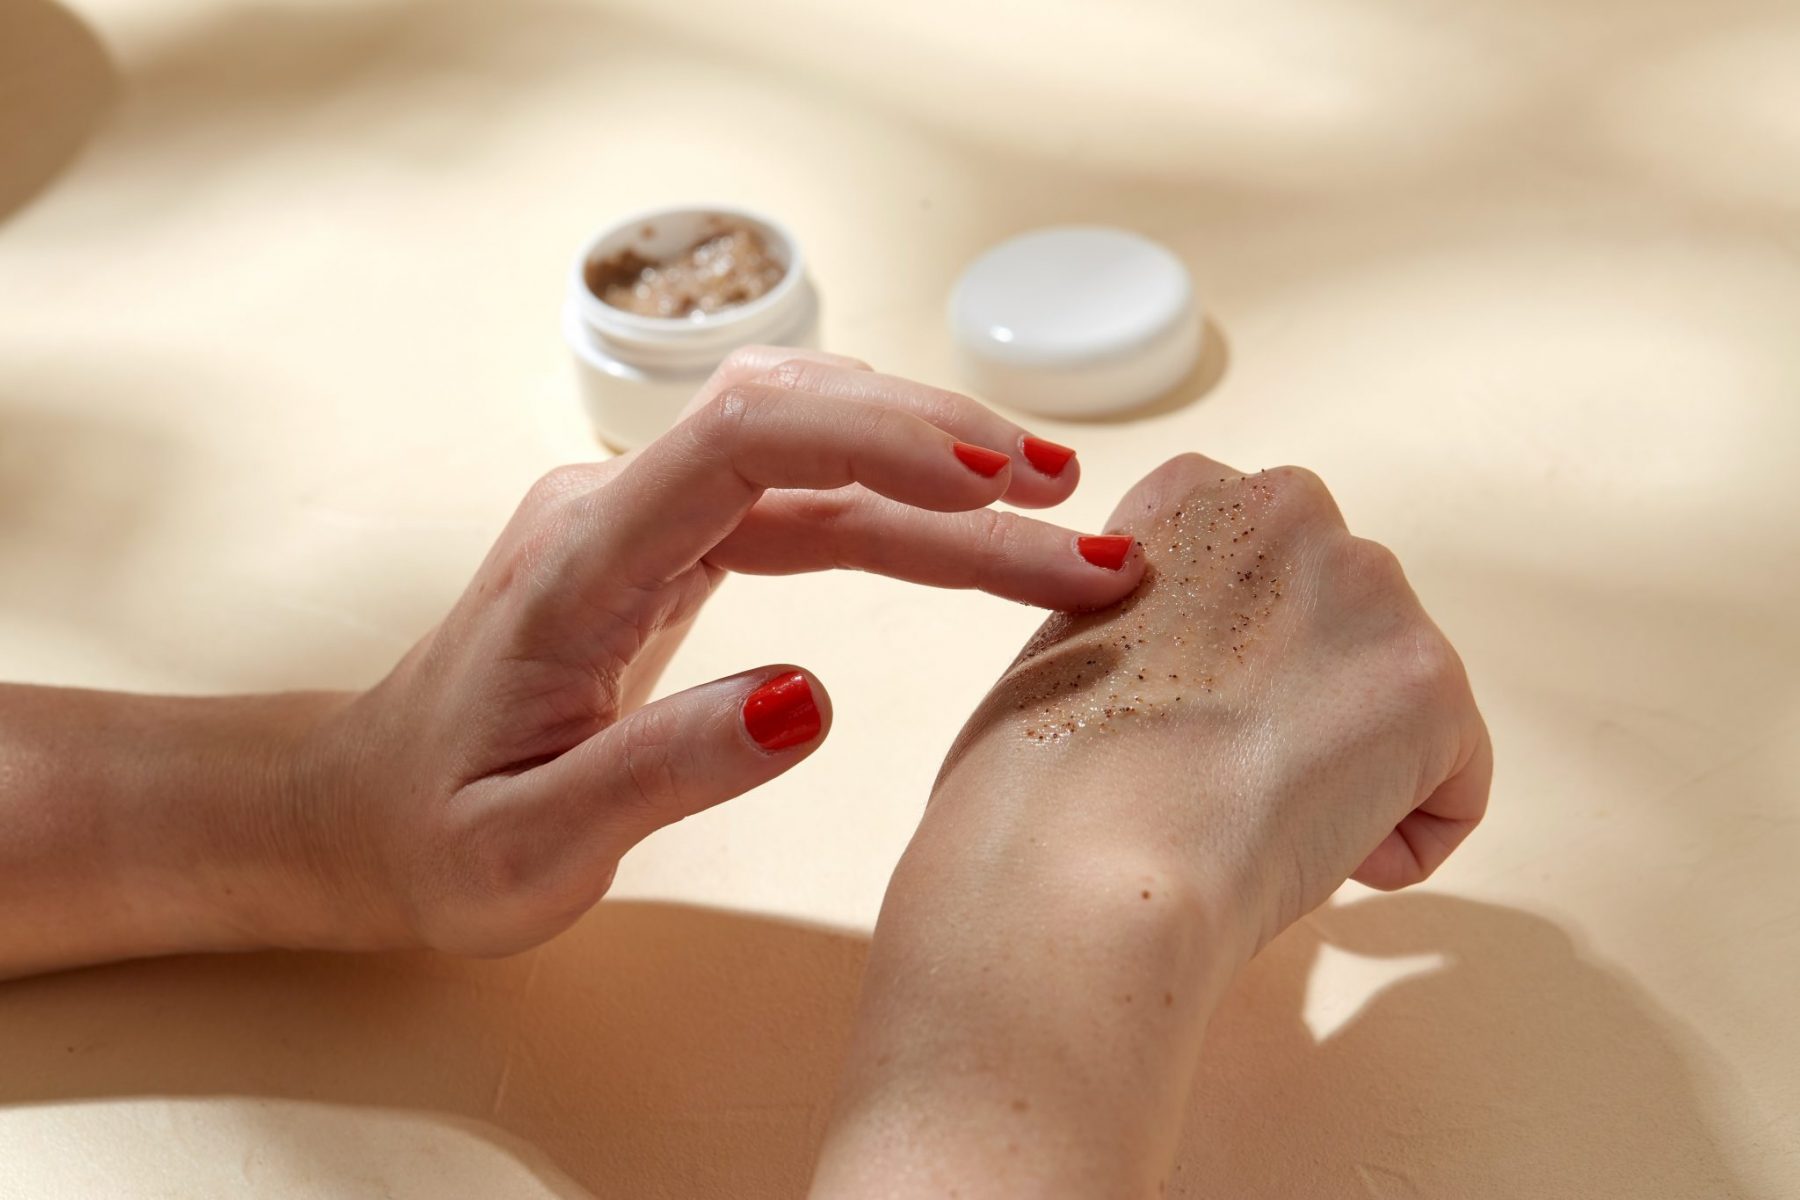 A women is applying body scrub on her hands